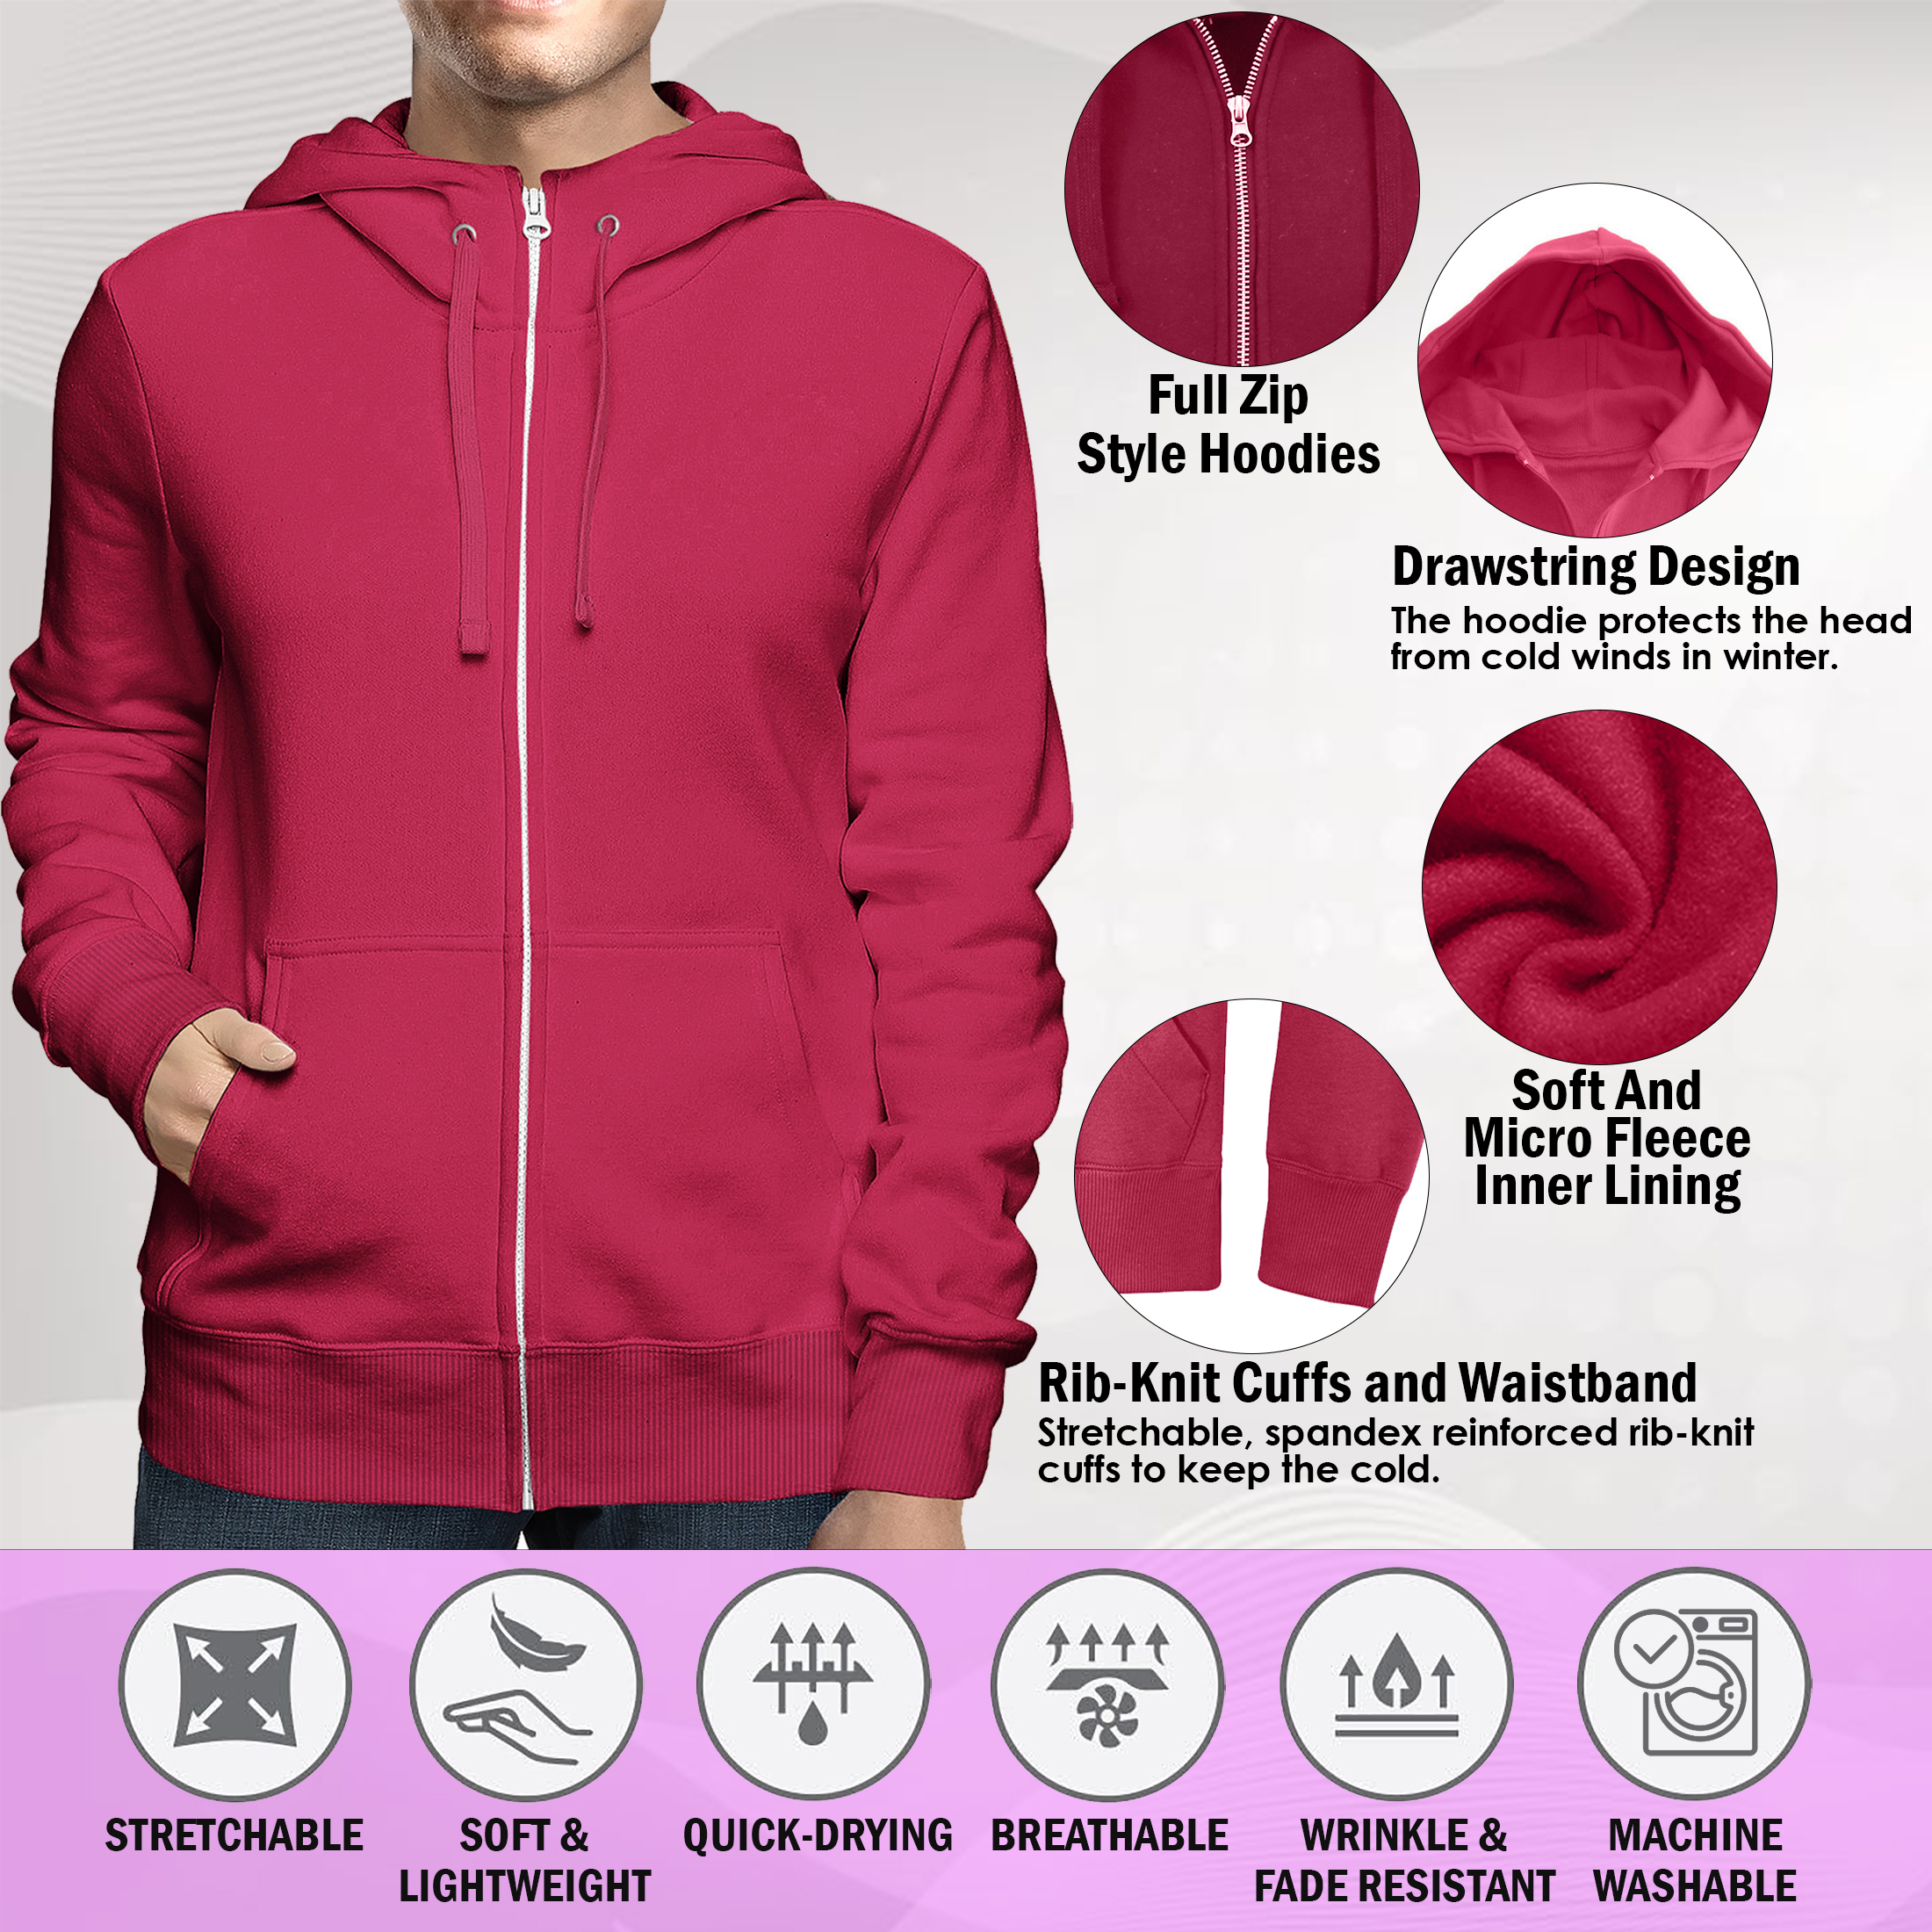 2-Pack: Men's Full Zip Up Fleece-Lined Hoodie Sweatshirt (Big & Tall Size Available) - Navy & Charcoal, Medium